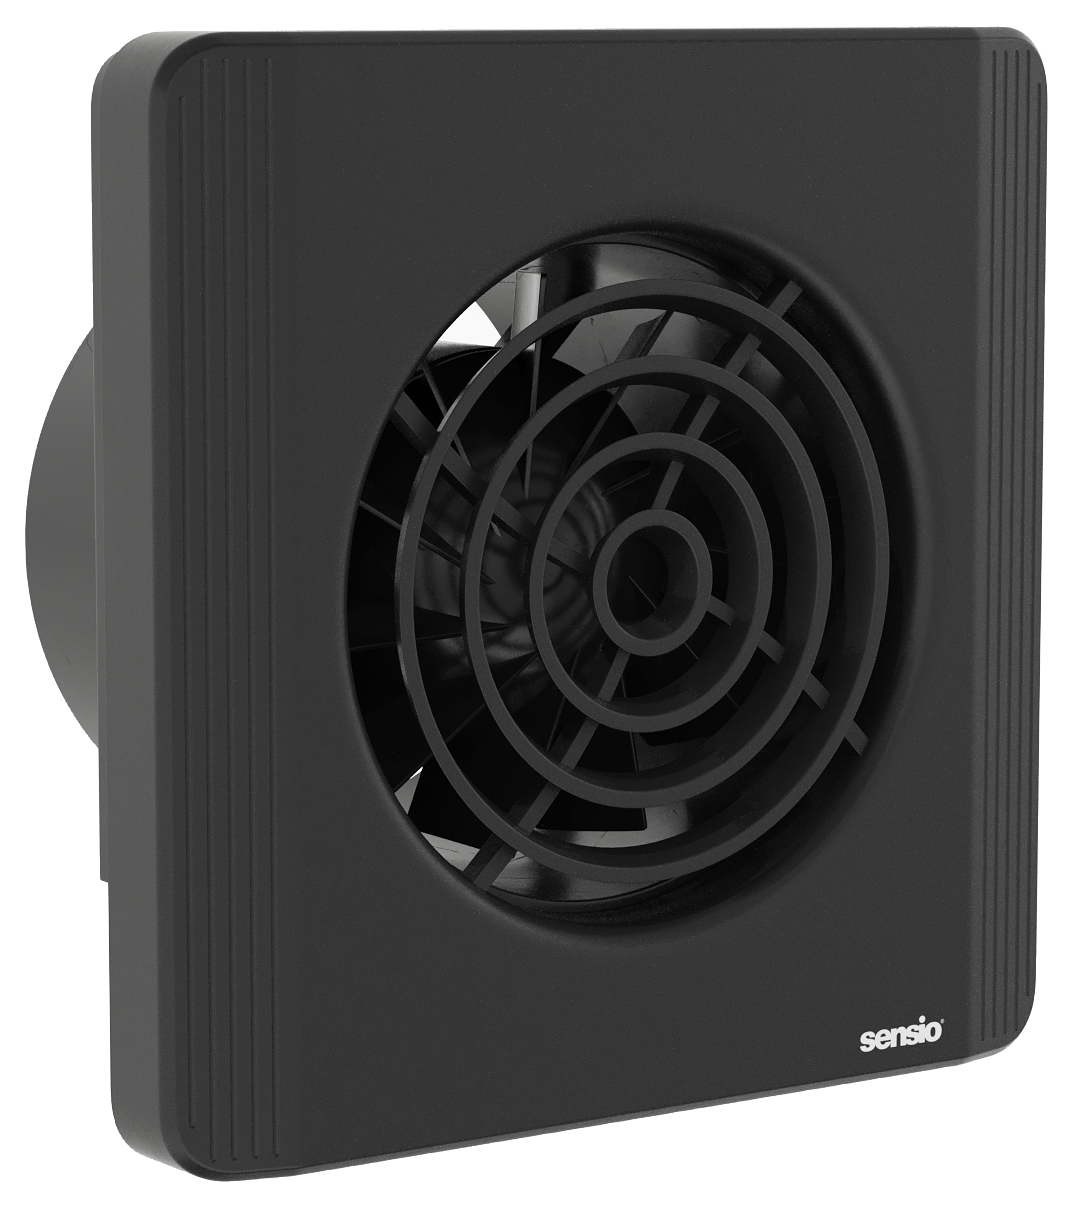 Sensio Layci Black Wall Ventilation Fan with Aquilo Ventilation Ducting Kit - 100mm